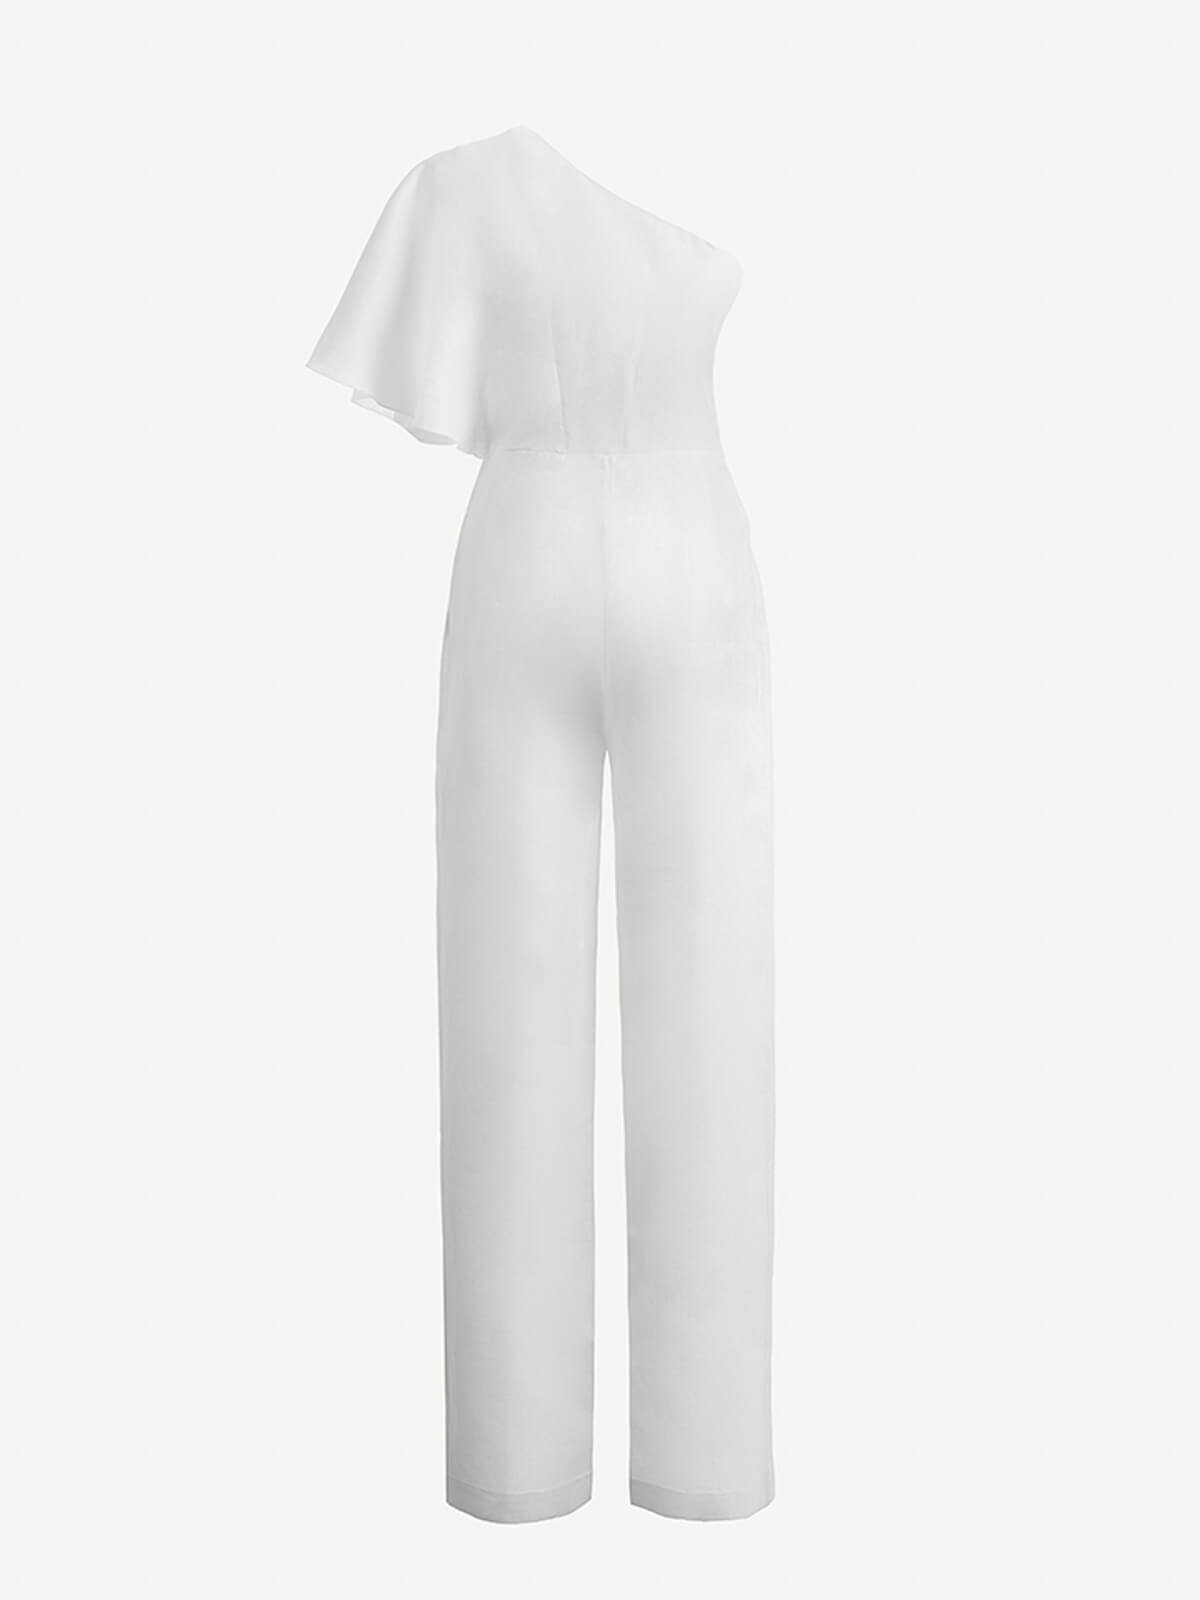 Jumpsuit Tuta Allegra 100% Capri white linen jumpsuit back